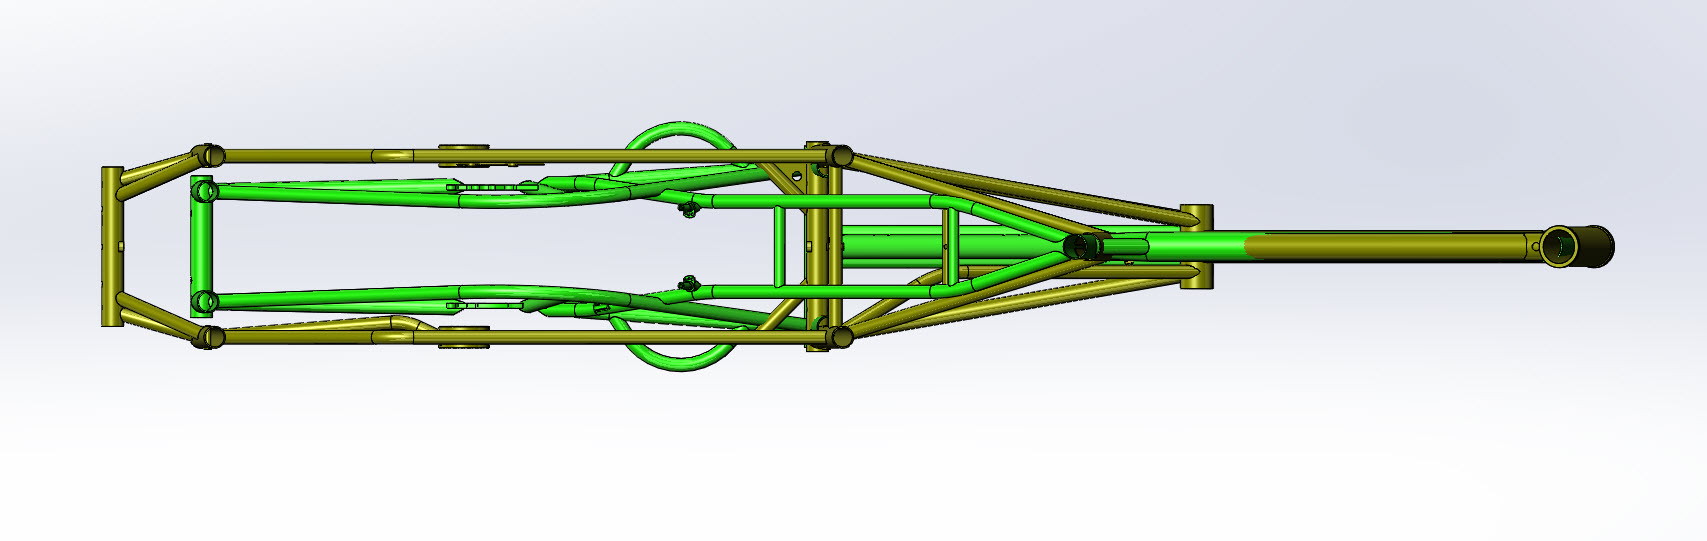 CAD illustration of a Surly Bike Fat Dummy bike frame and Kawi bike frame - overlays - overhead view